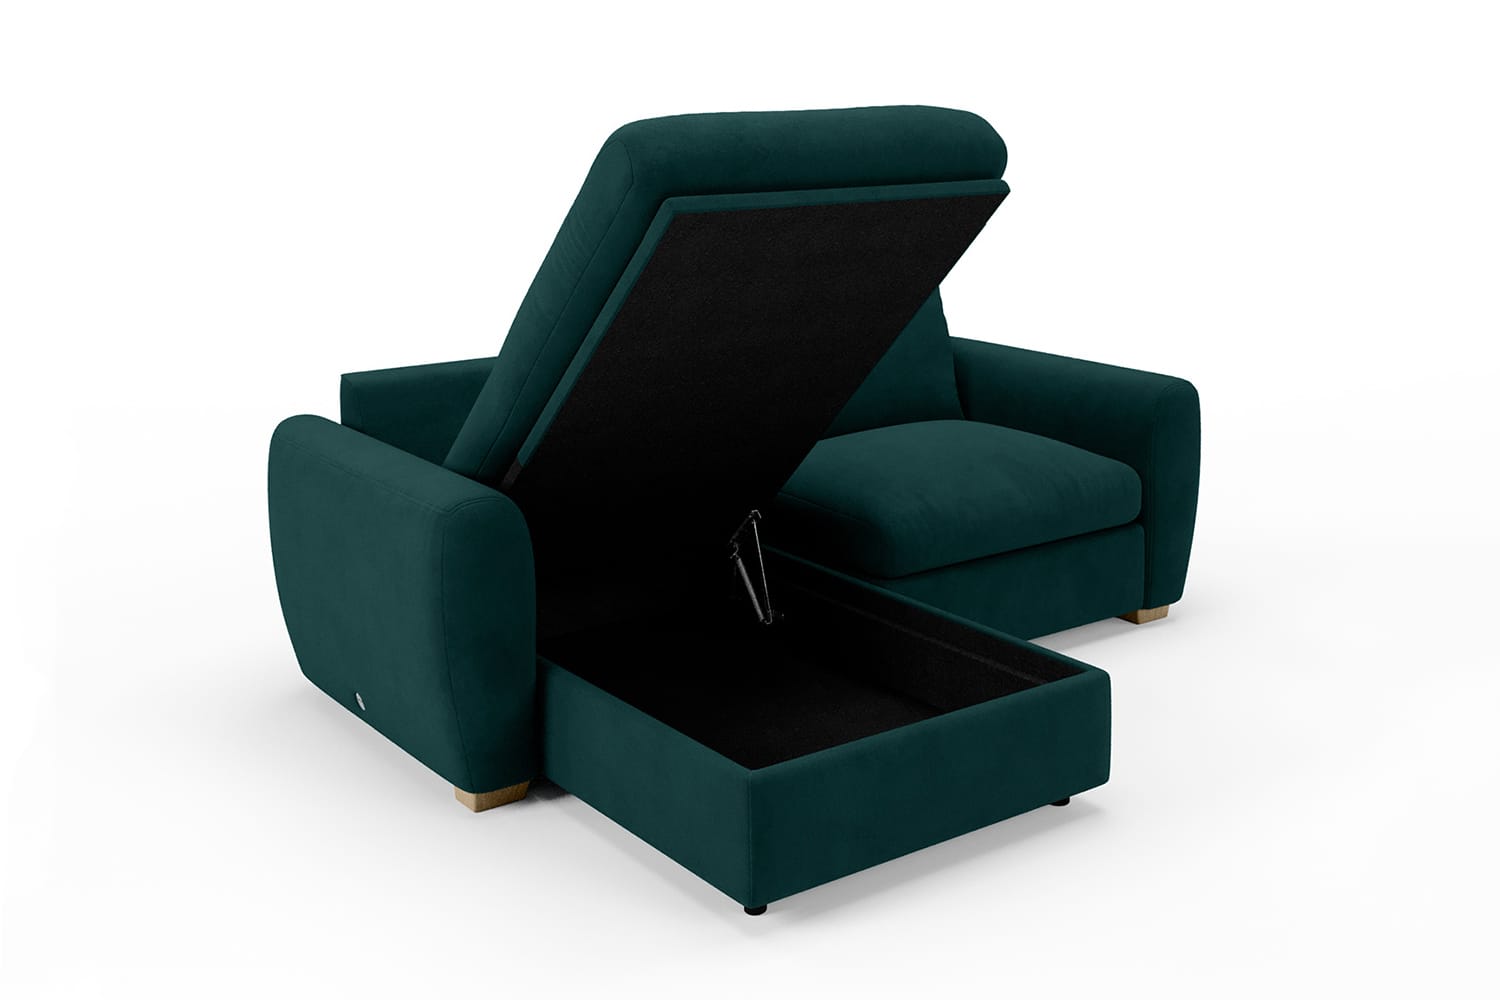 SNUG | The Cloud Sundae Chaise Corner Sofa in Pine Green variant_40414969593904